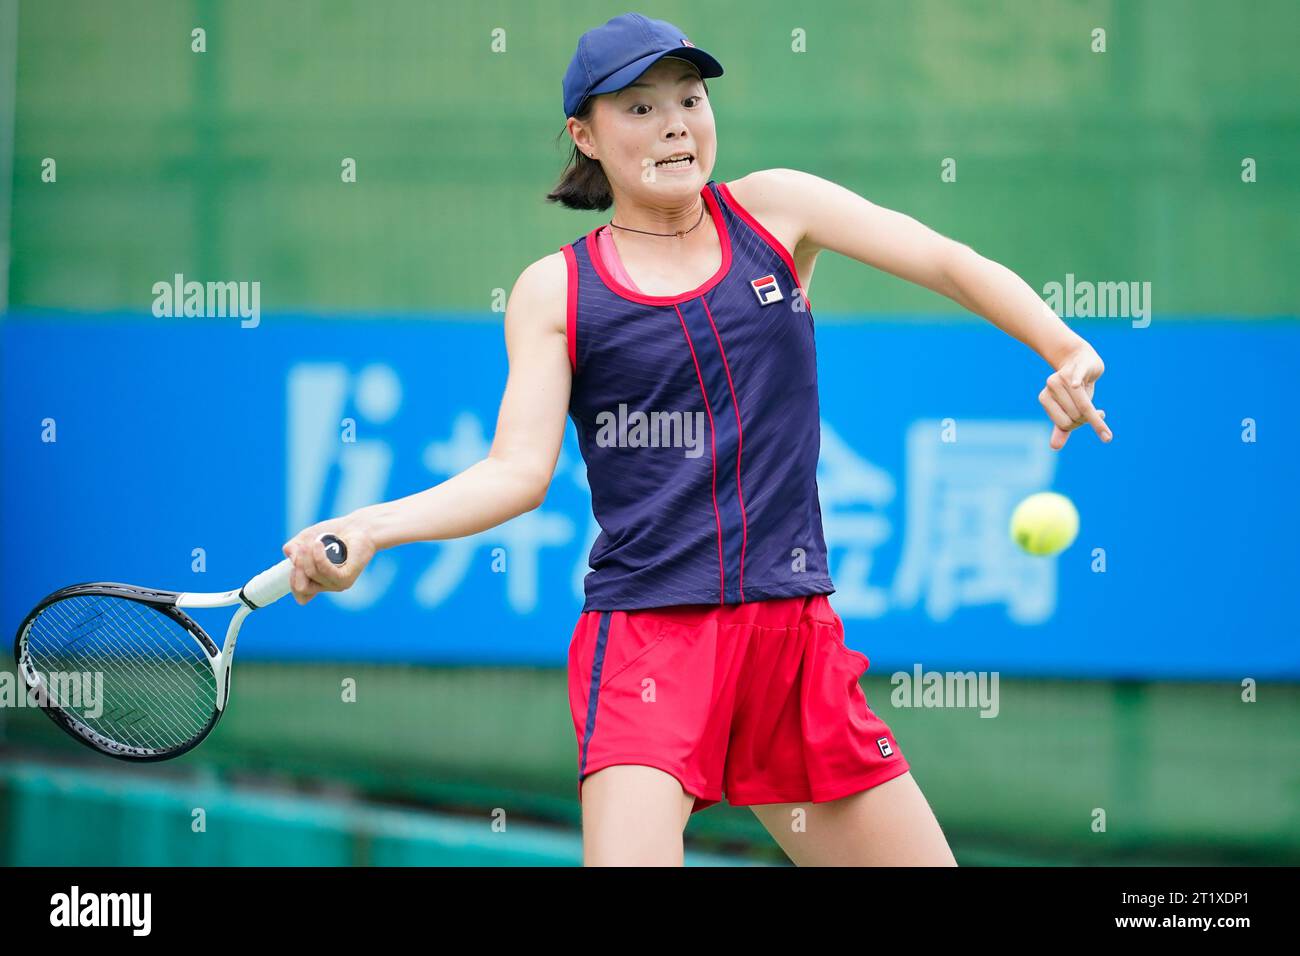 HIRALIY Adult Recreational 2 Players Tennis Rackets Macao